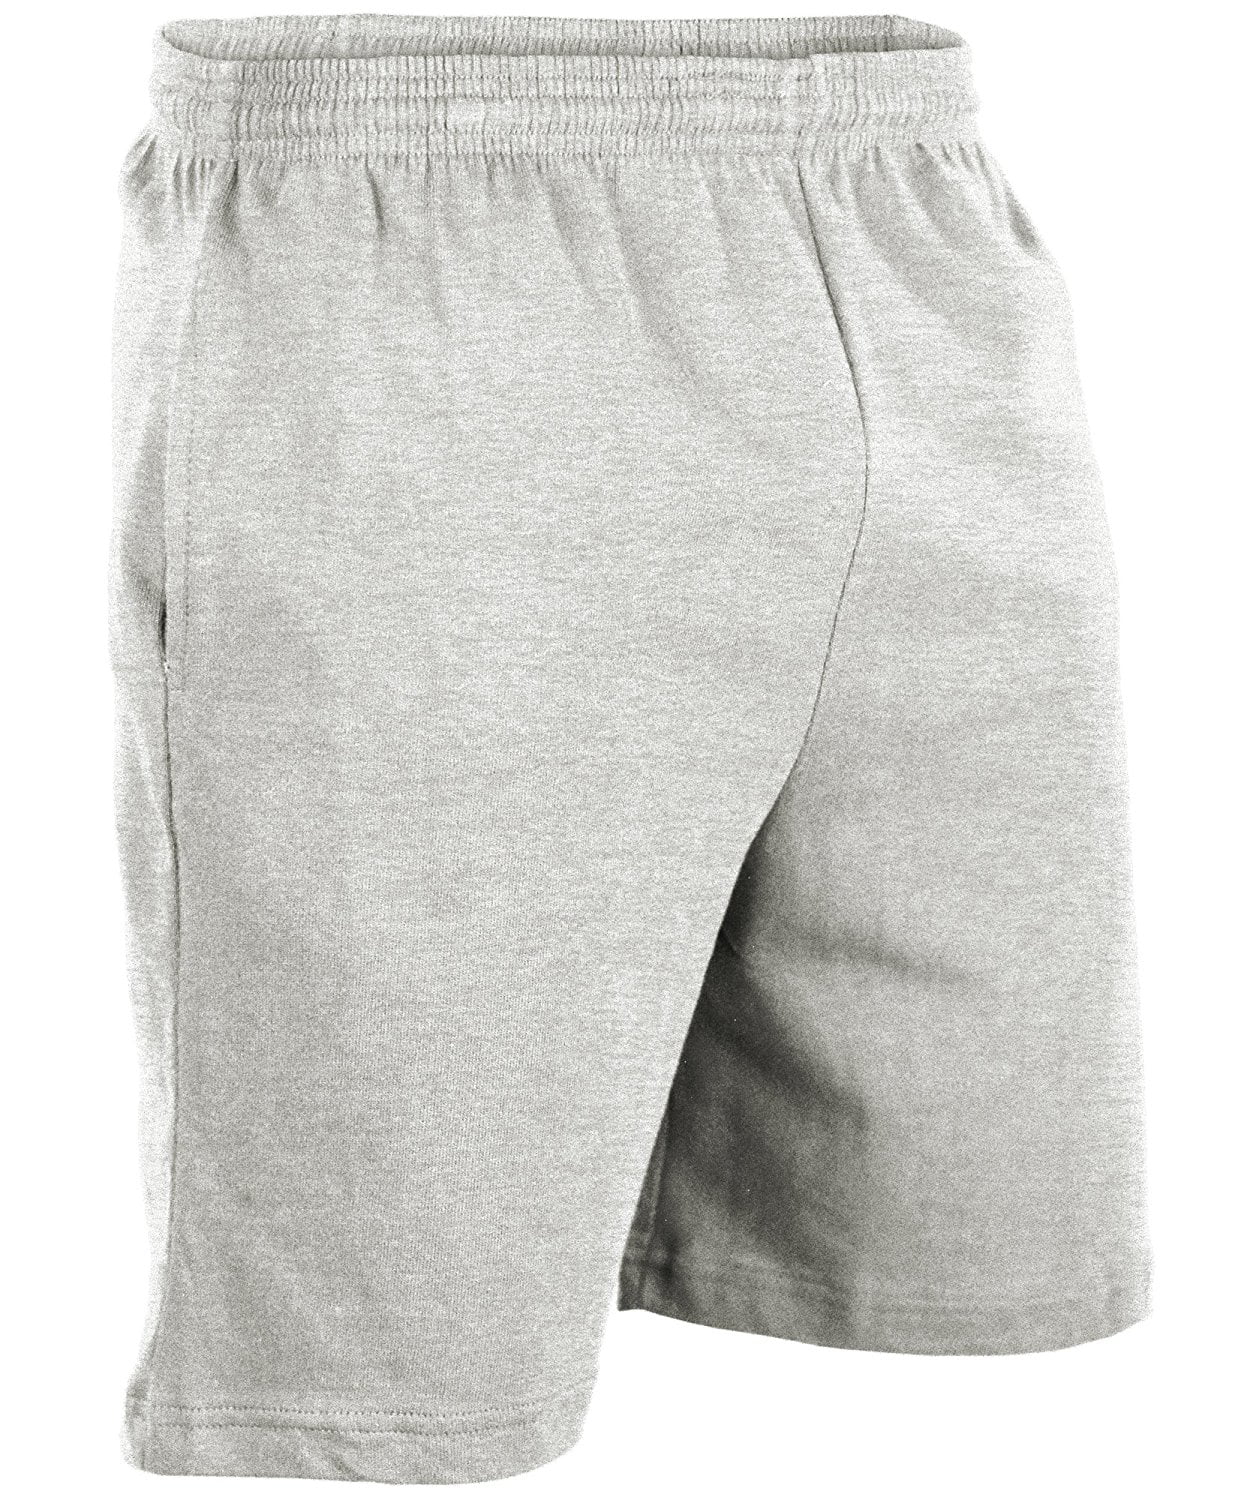 SCODI Mens Shorts Casual Comfy Workout Athletic Shorts Elastic Waist Drawstring Zipper Pockets 